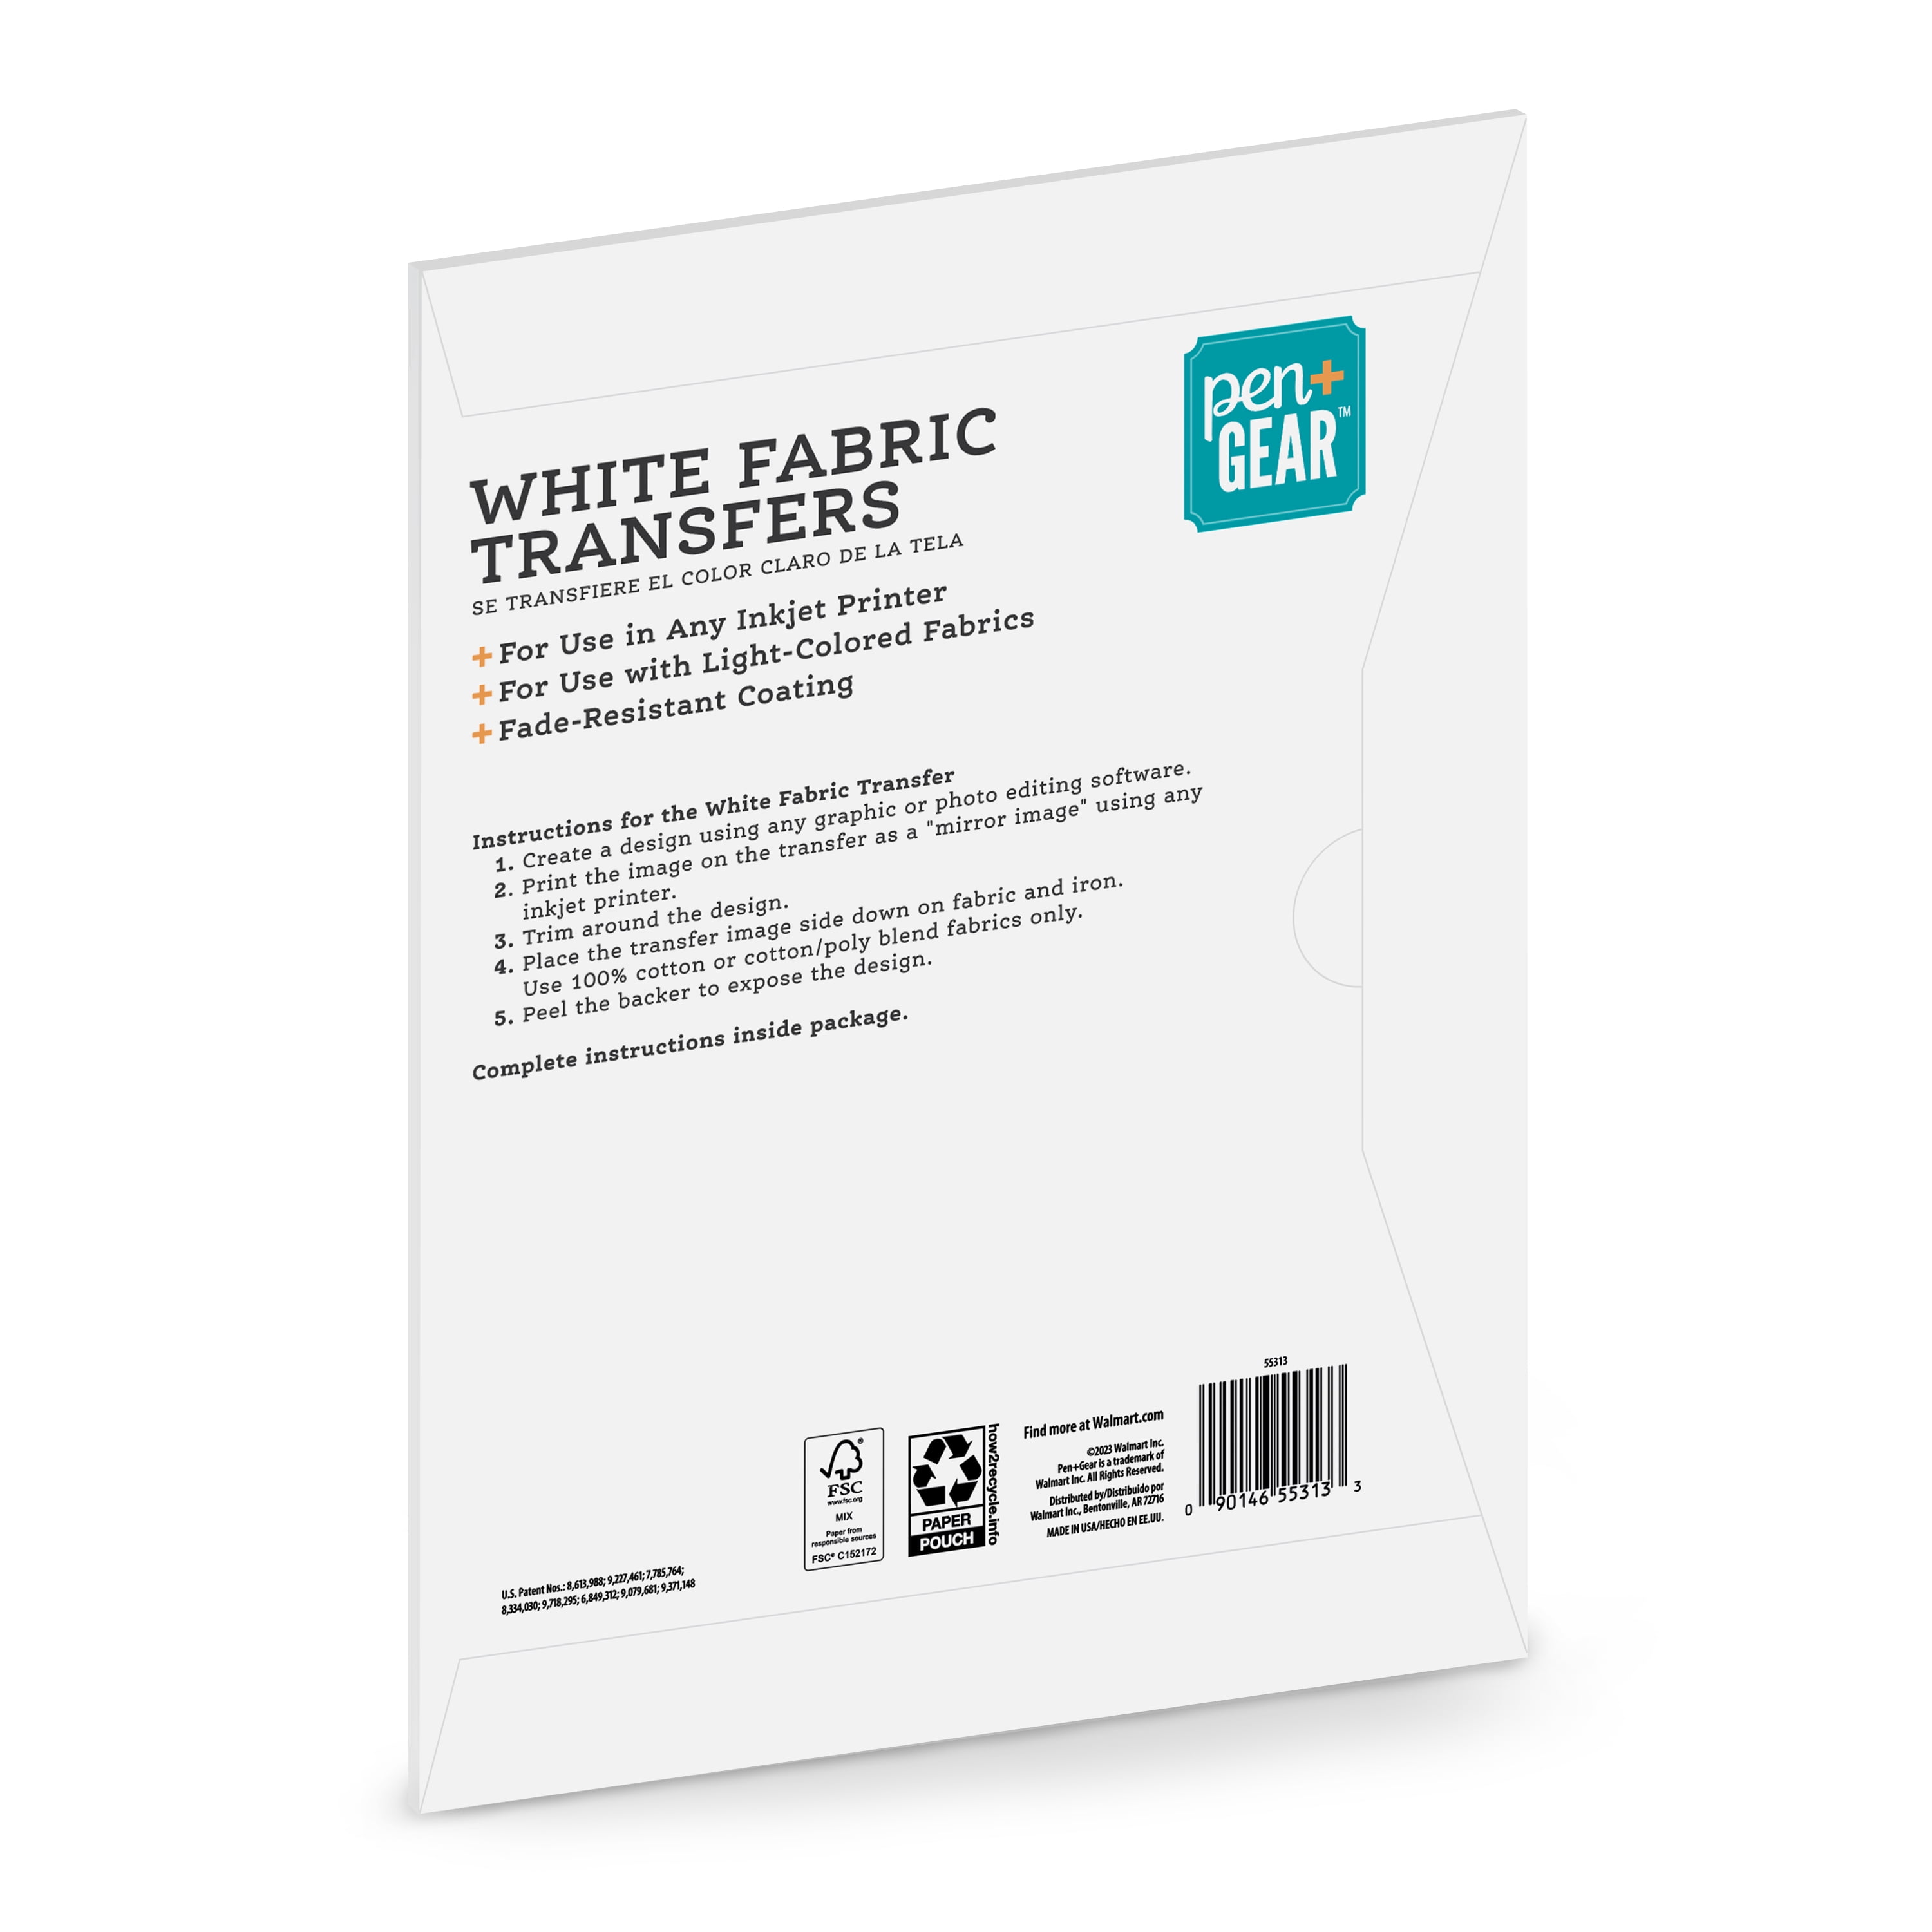 Pen + Gear White & Dark Fabric Transfer Paper, 8.5 x 11, 15 Sheets (55164)  1 PK